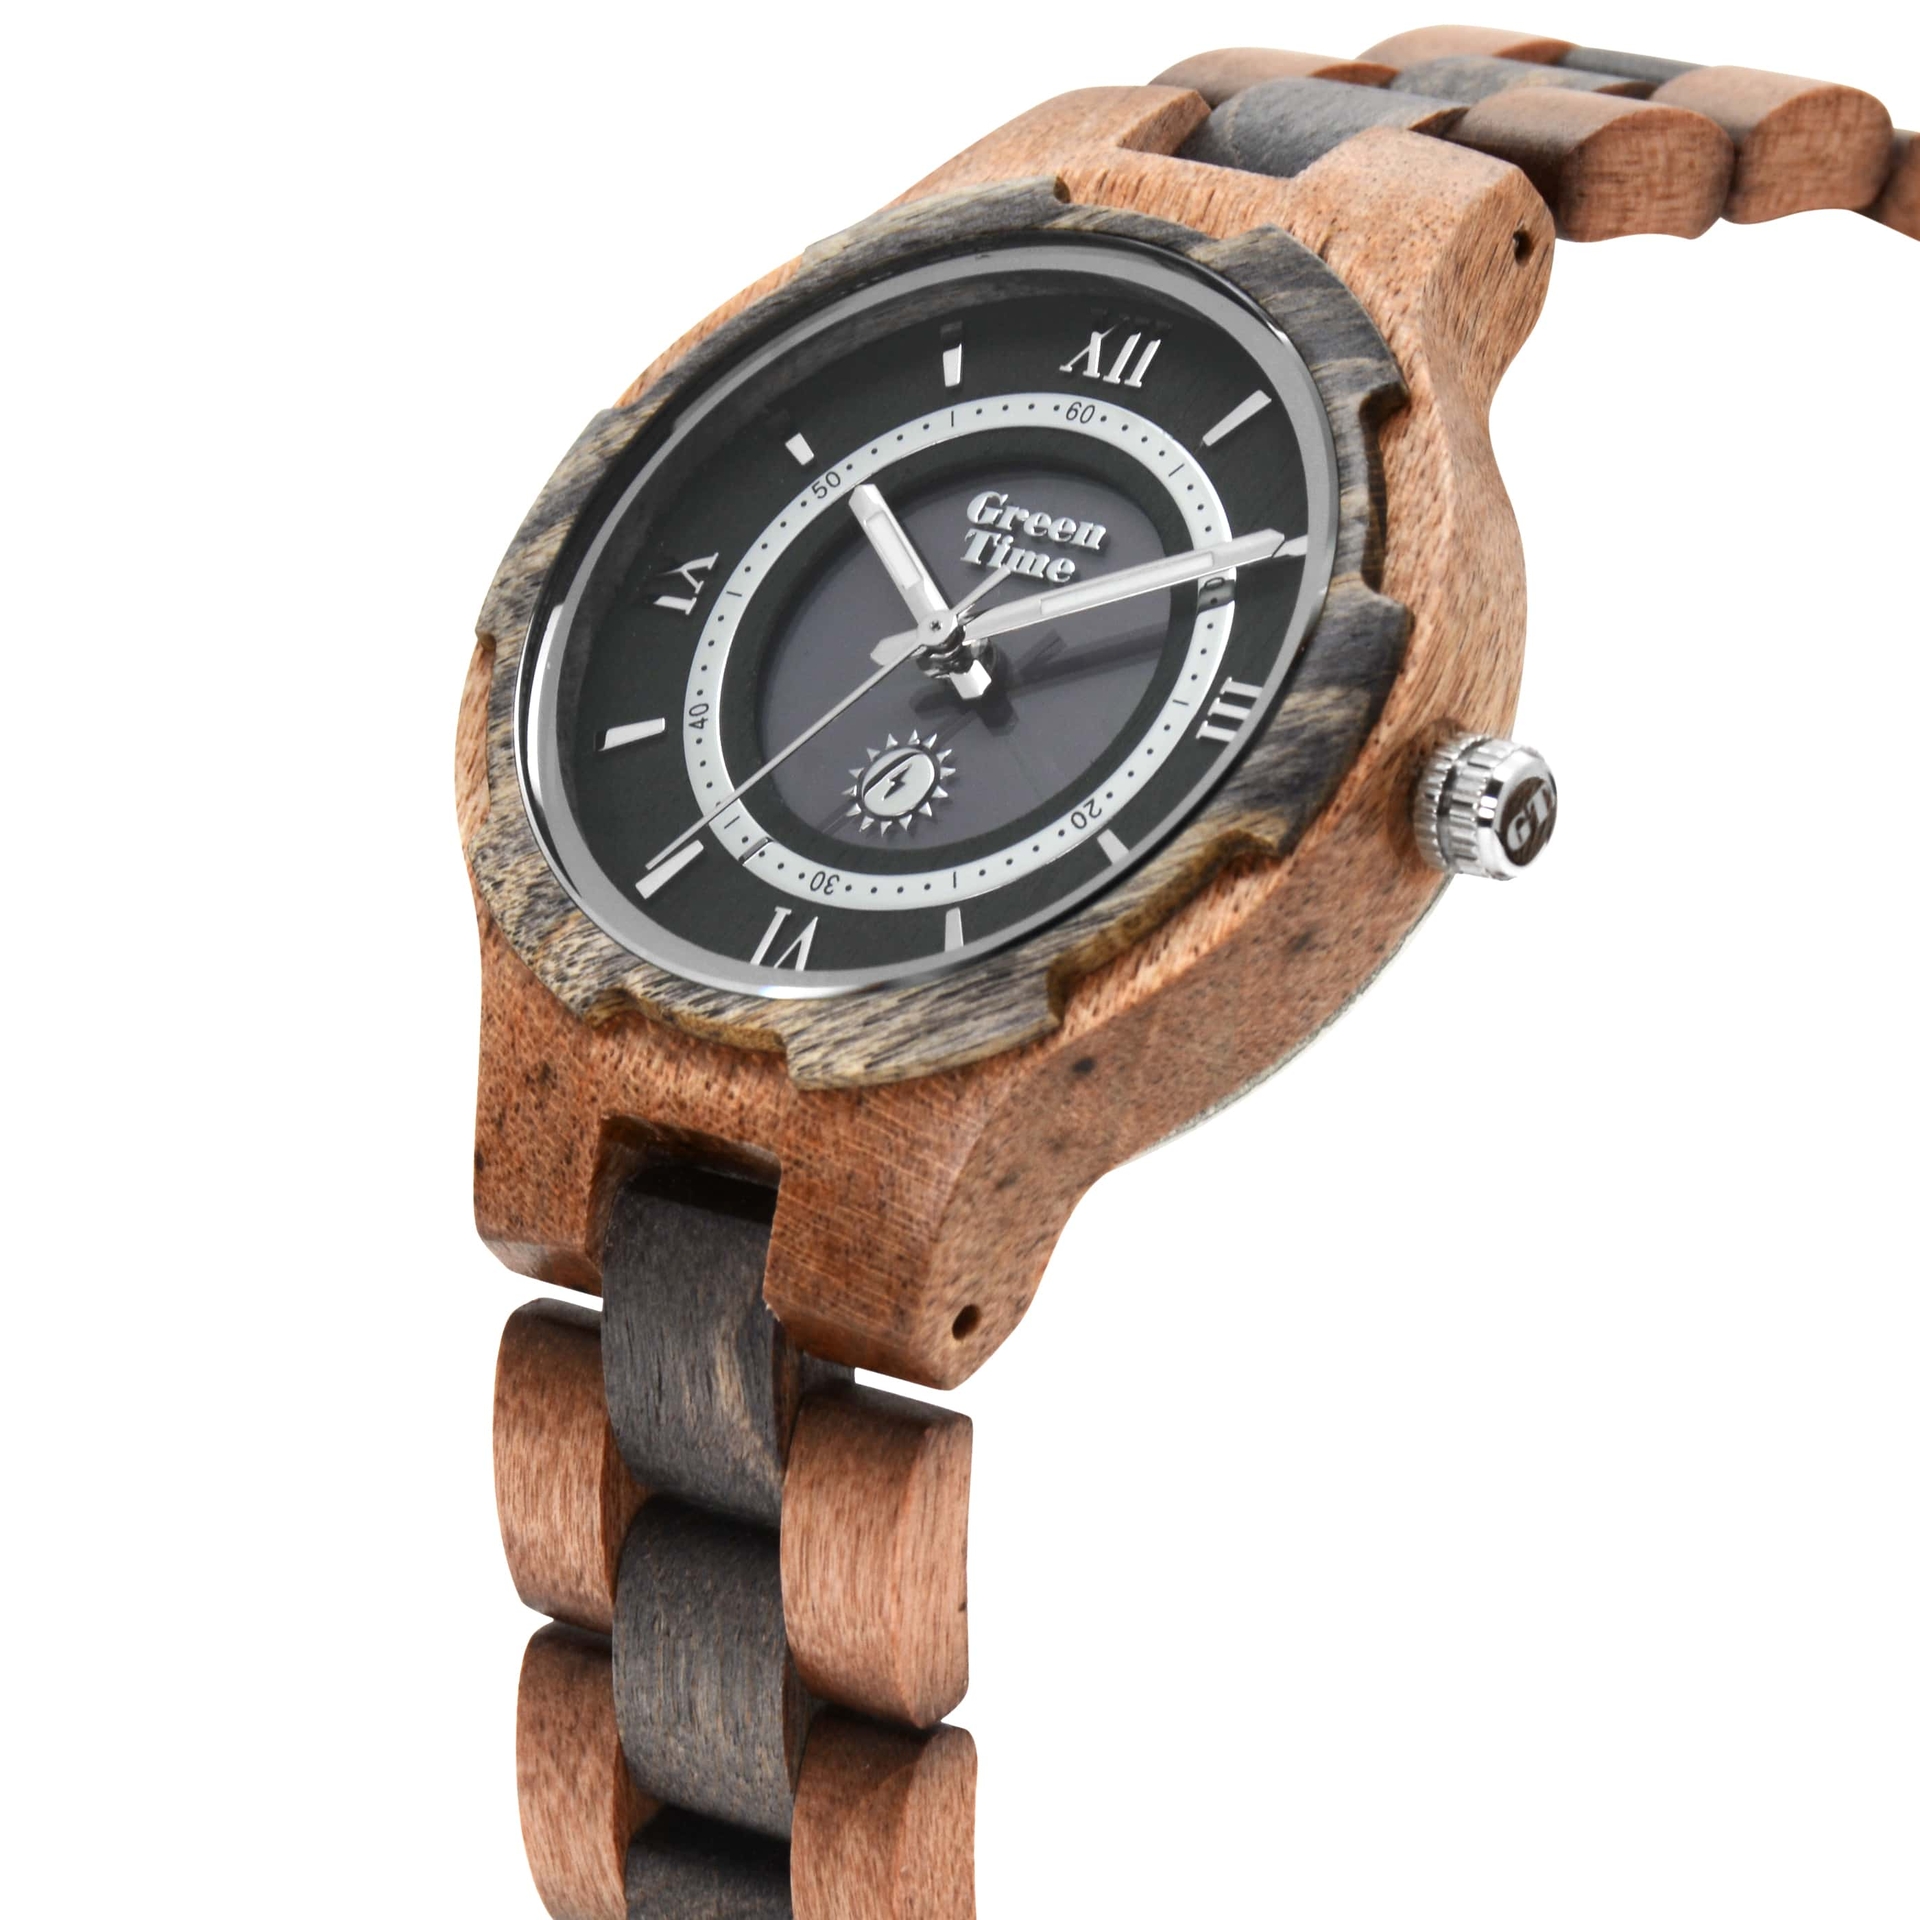 Wooden GreenTime solar watch - Greentime wood watch